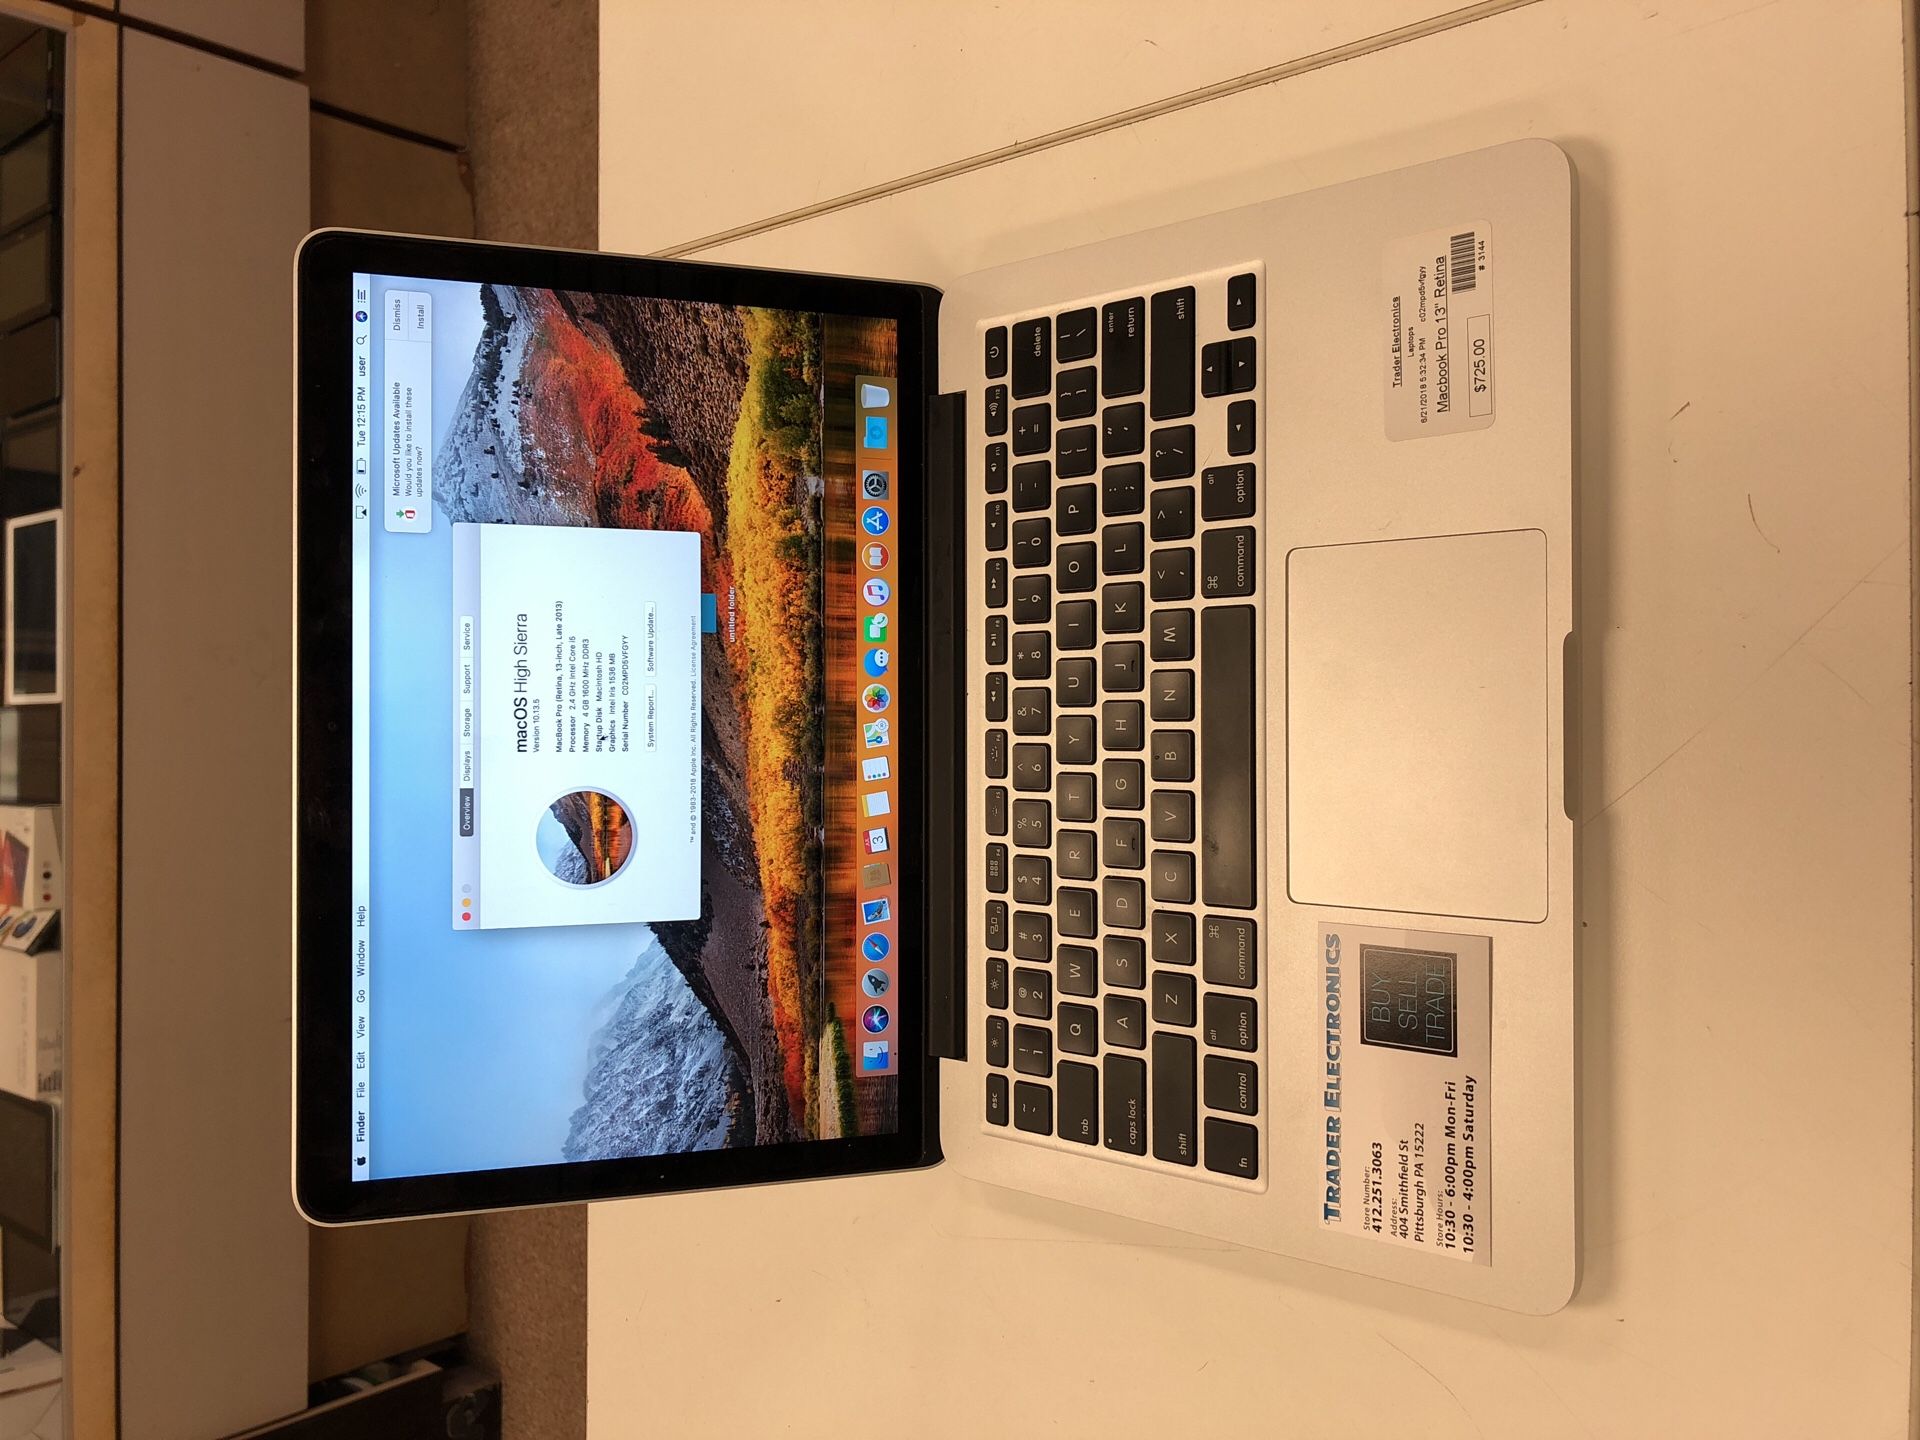 MacBook Pro 13-inch Retina display (late 2013)